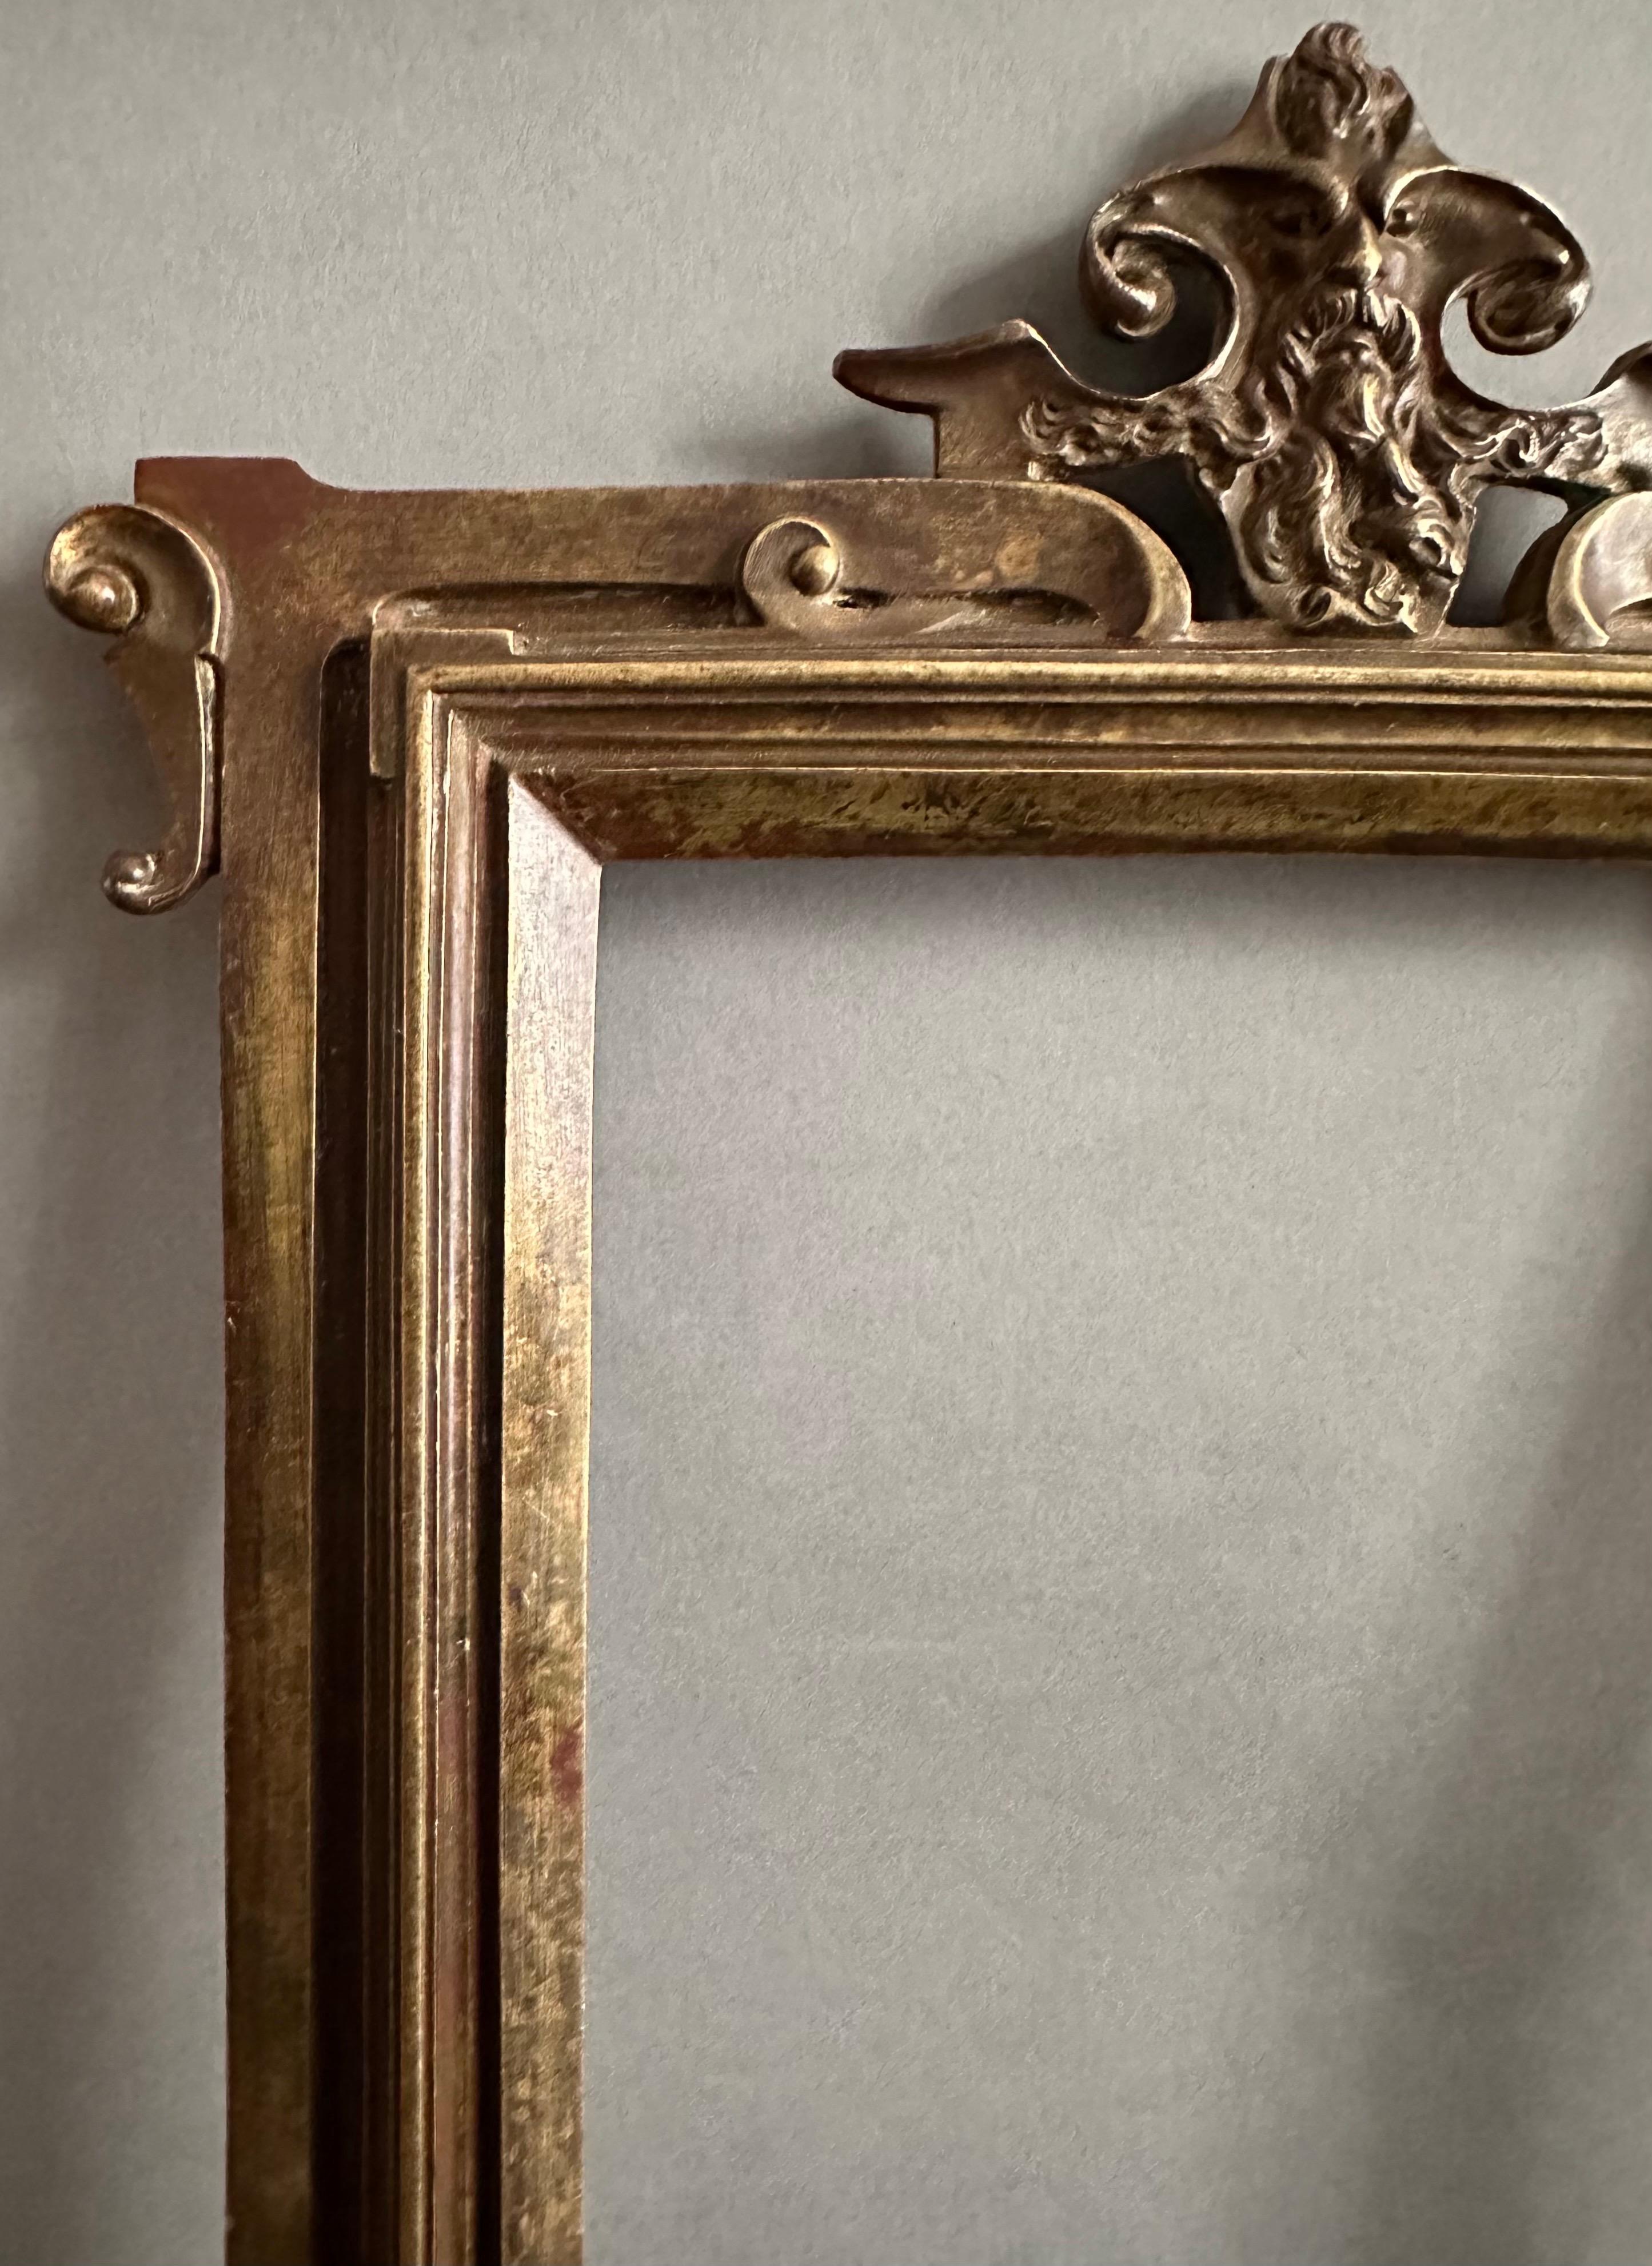 Patinated Bronze Frame Late 19th “Art Nouveau” Period Pediment Figure of Silenus  For Sale